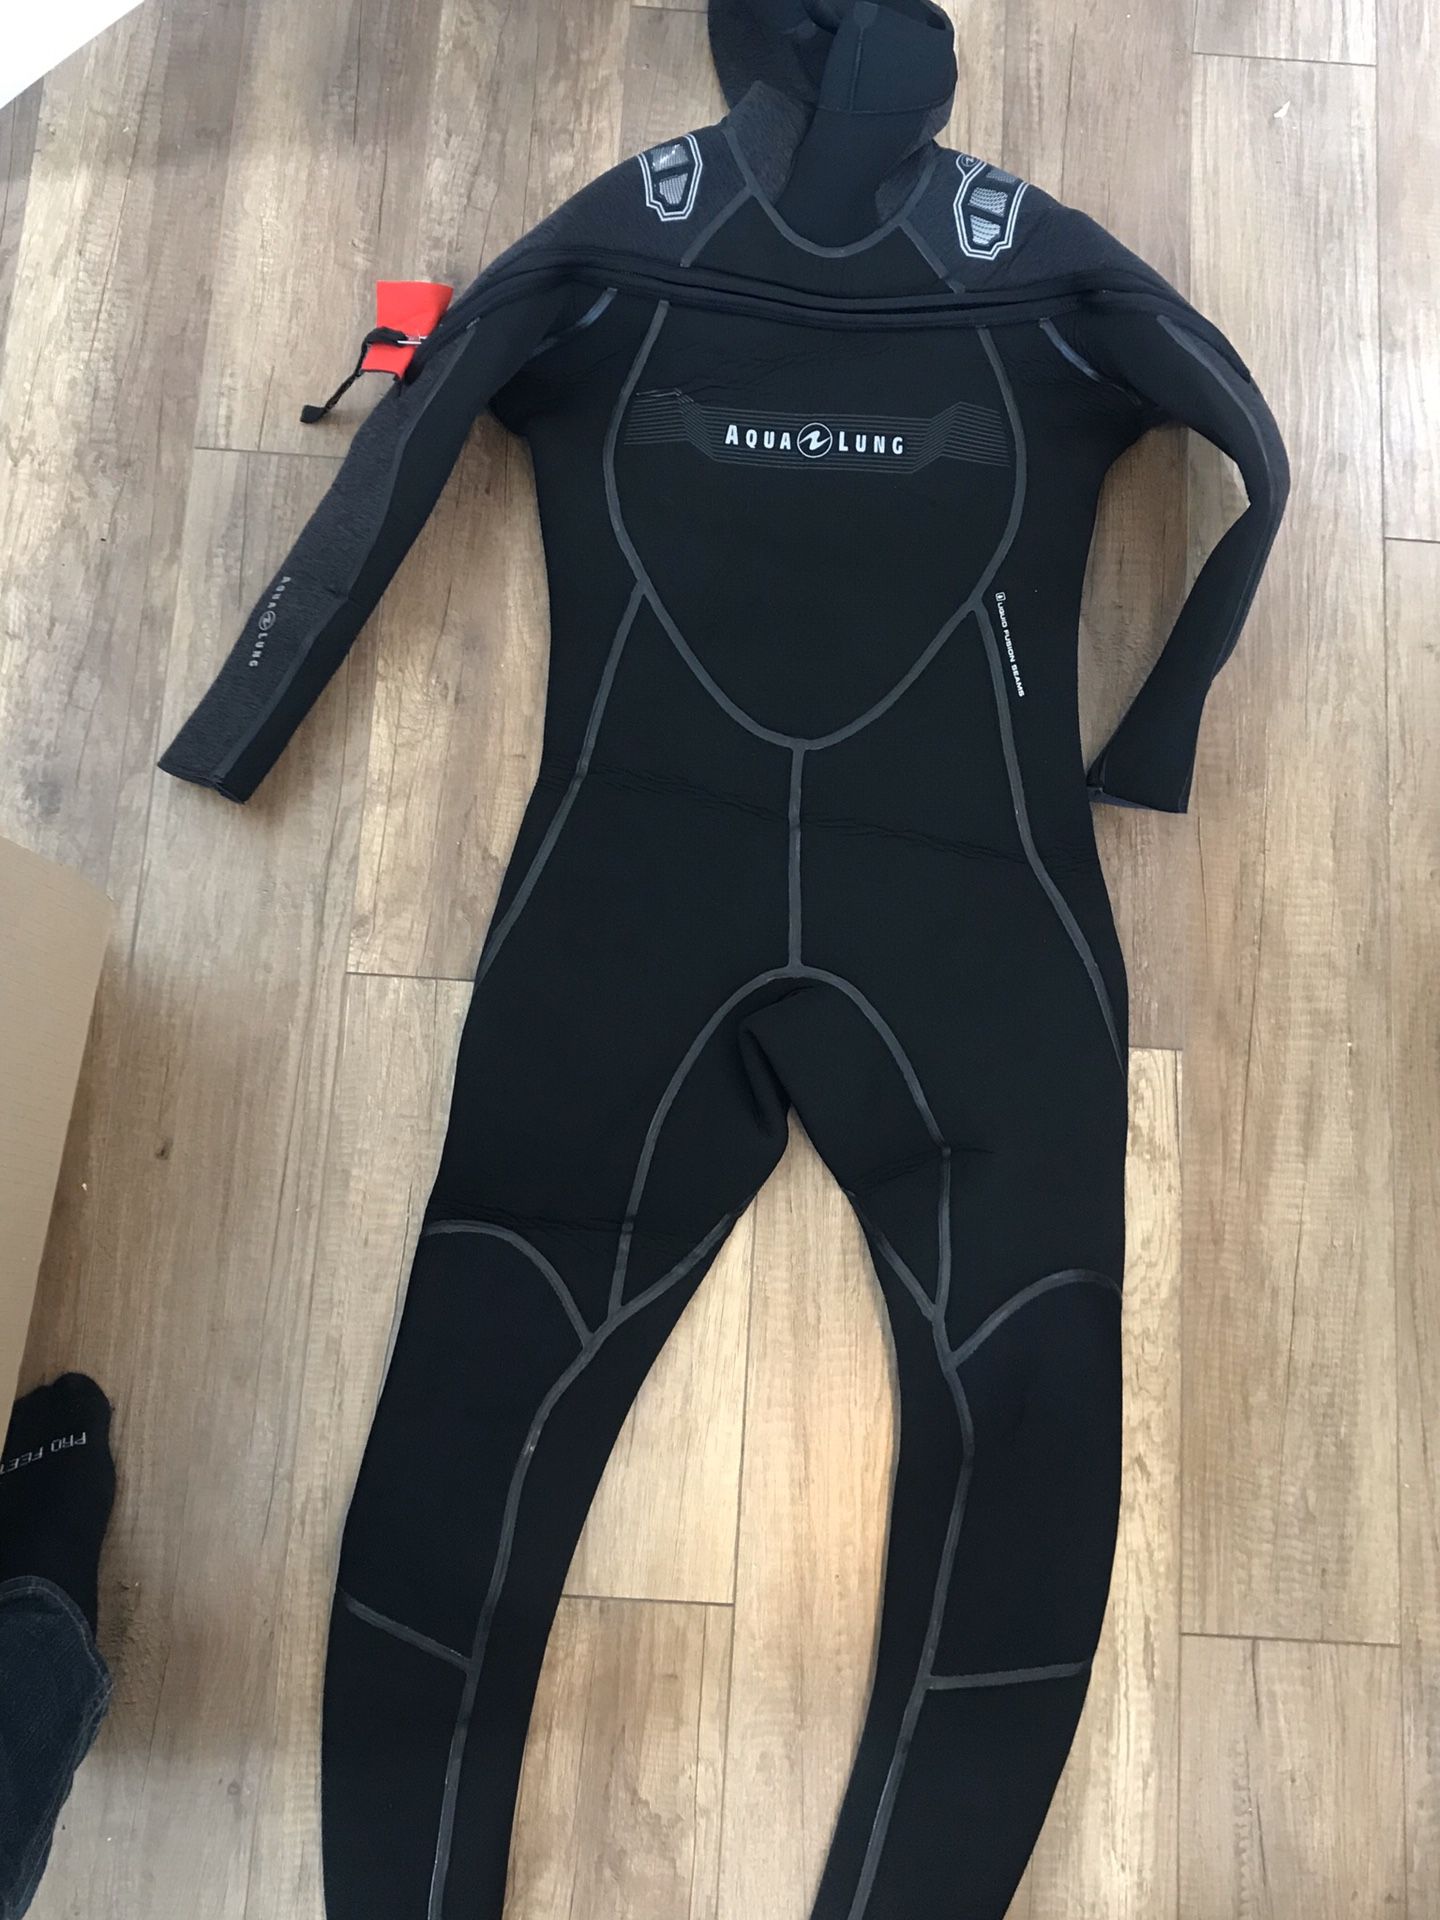 Aqualung solafx 8/7 men’s wetsuit semi/dry